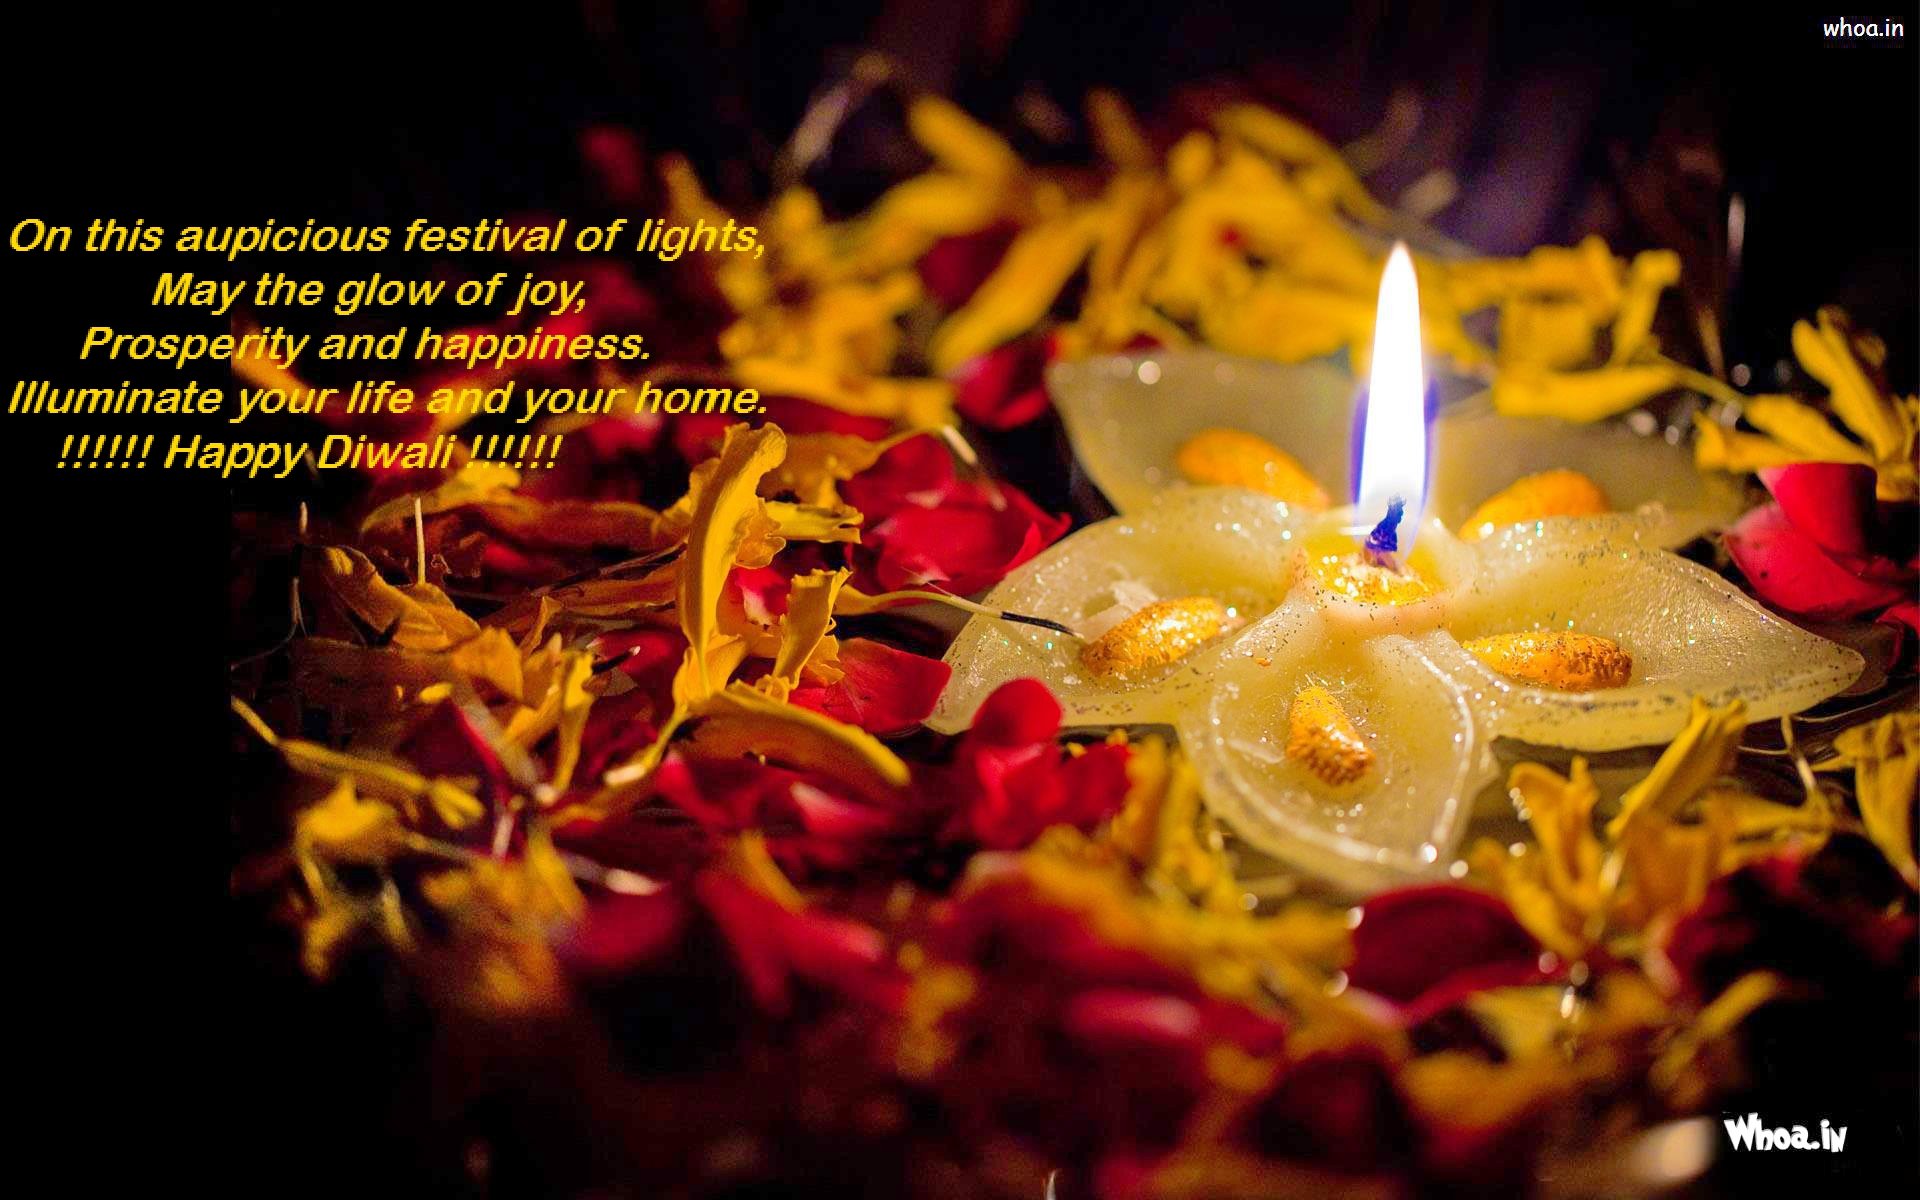 happy diwali wallpaper,lighting,diwali,candle,event,flame